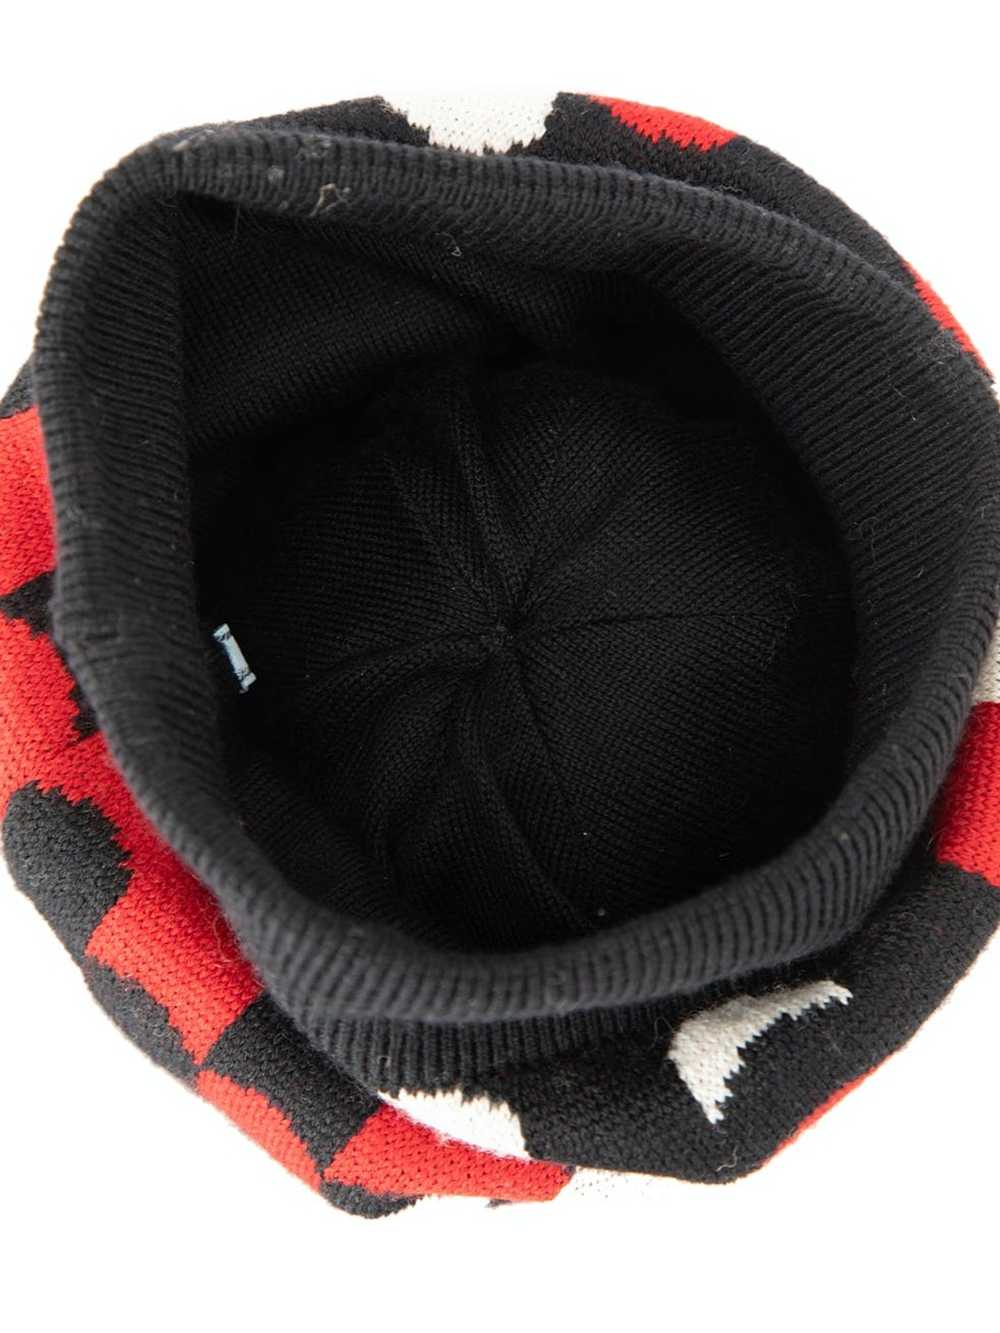 Hats × Prada Black & Red Patterned Fur Pom Pom Be… - image 3